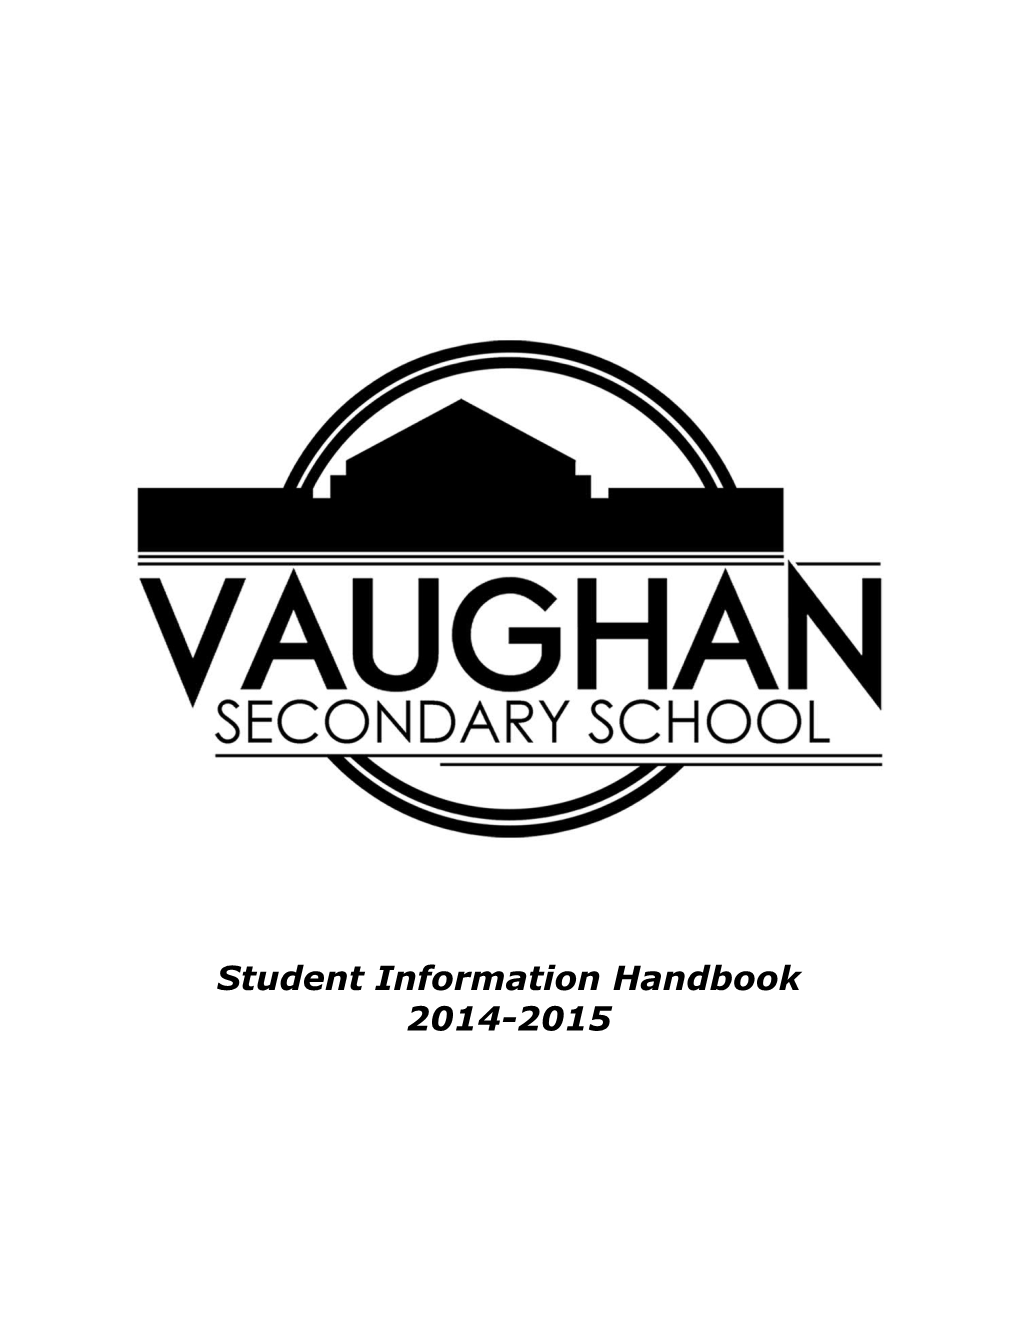 Student Information Handbook 2014-2015